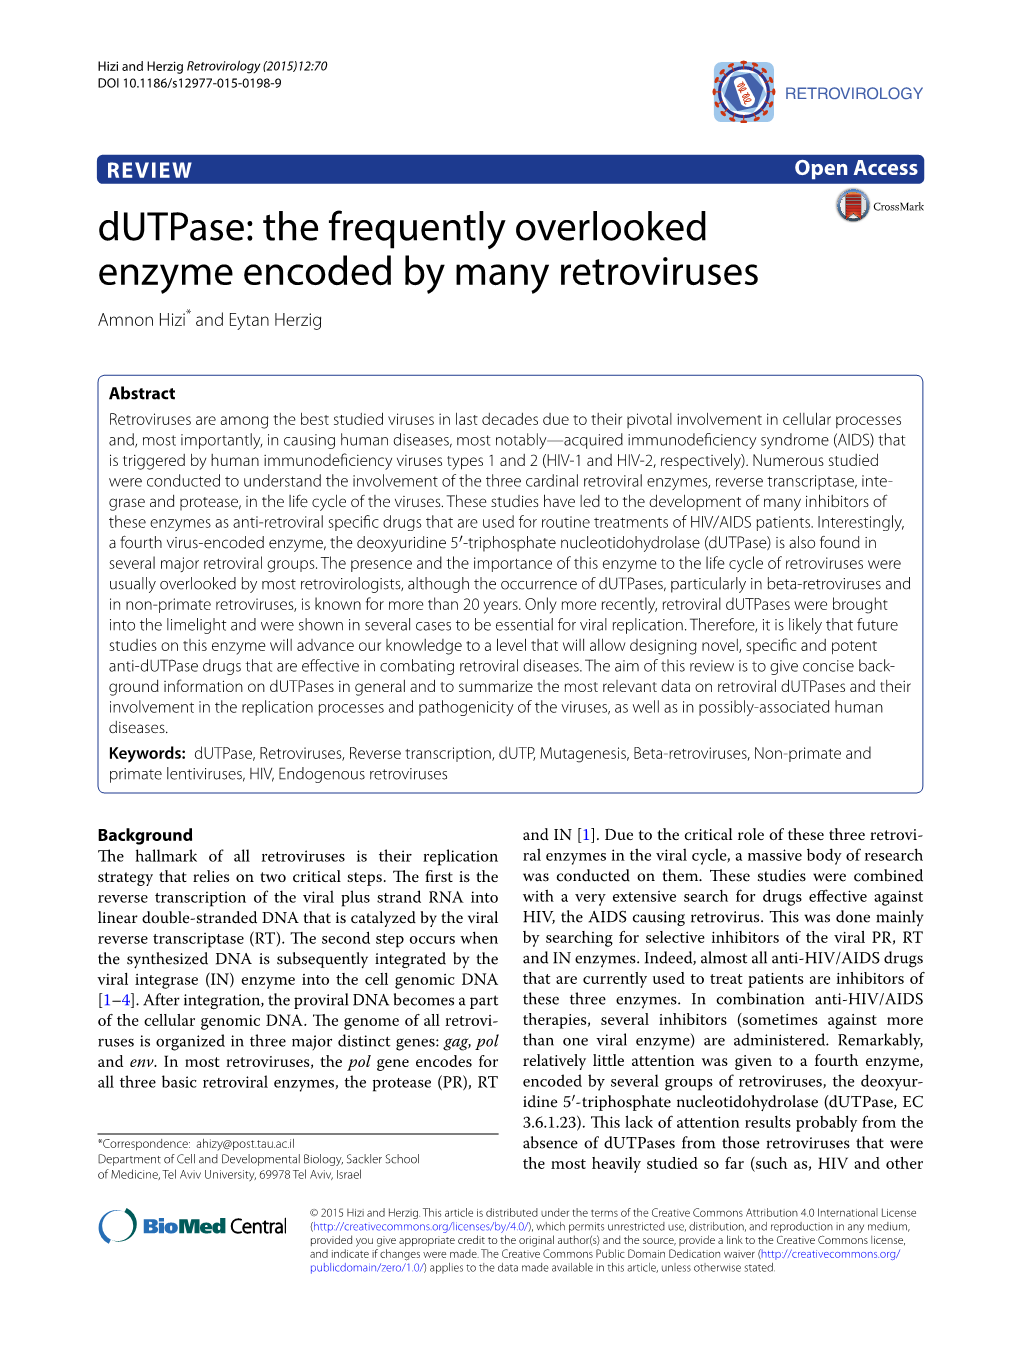 Dutpase: the Frequently Overlooked Enzyme Encoded by Many Retroviruses Amnon Hizi* and Eytan Herzig